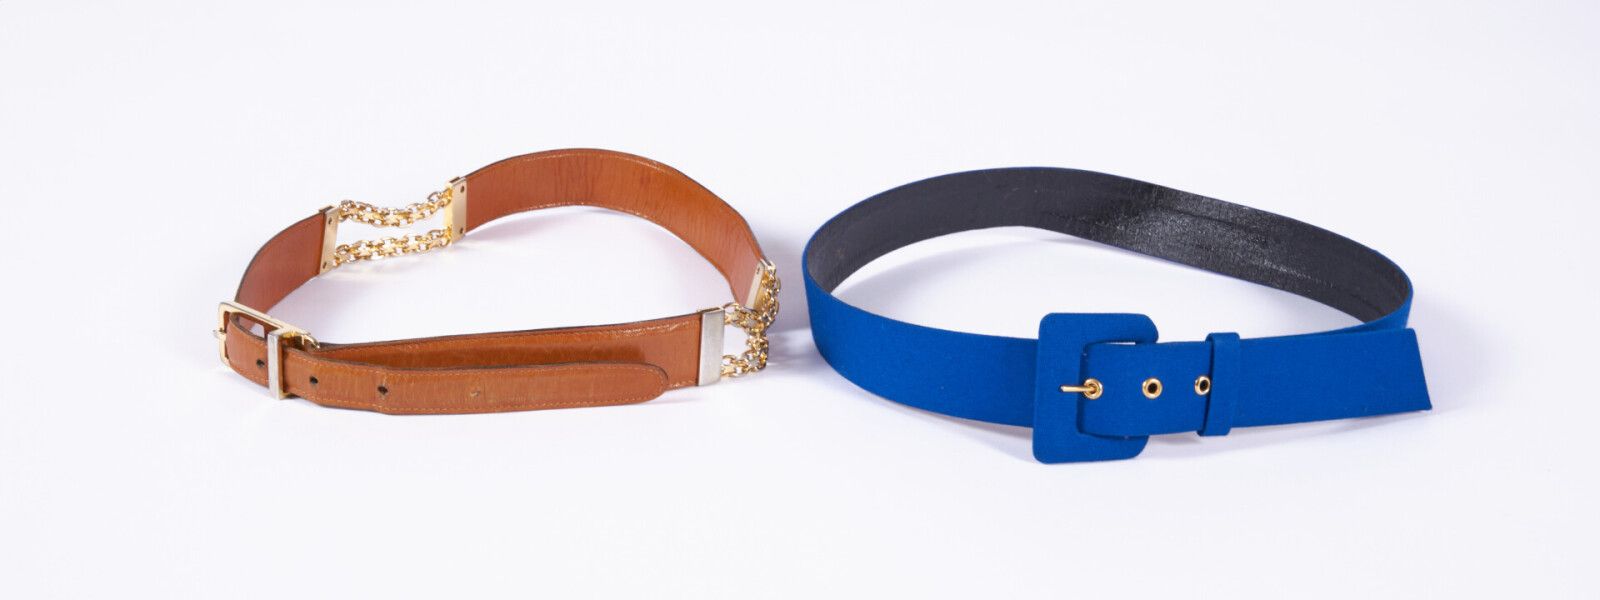 Null GIVENCHY, RODO

两条电蓝色绉绸、天然皮革和鎏金金属的腰带

(约75厘米)(金属上有小的铜锈)